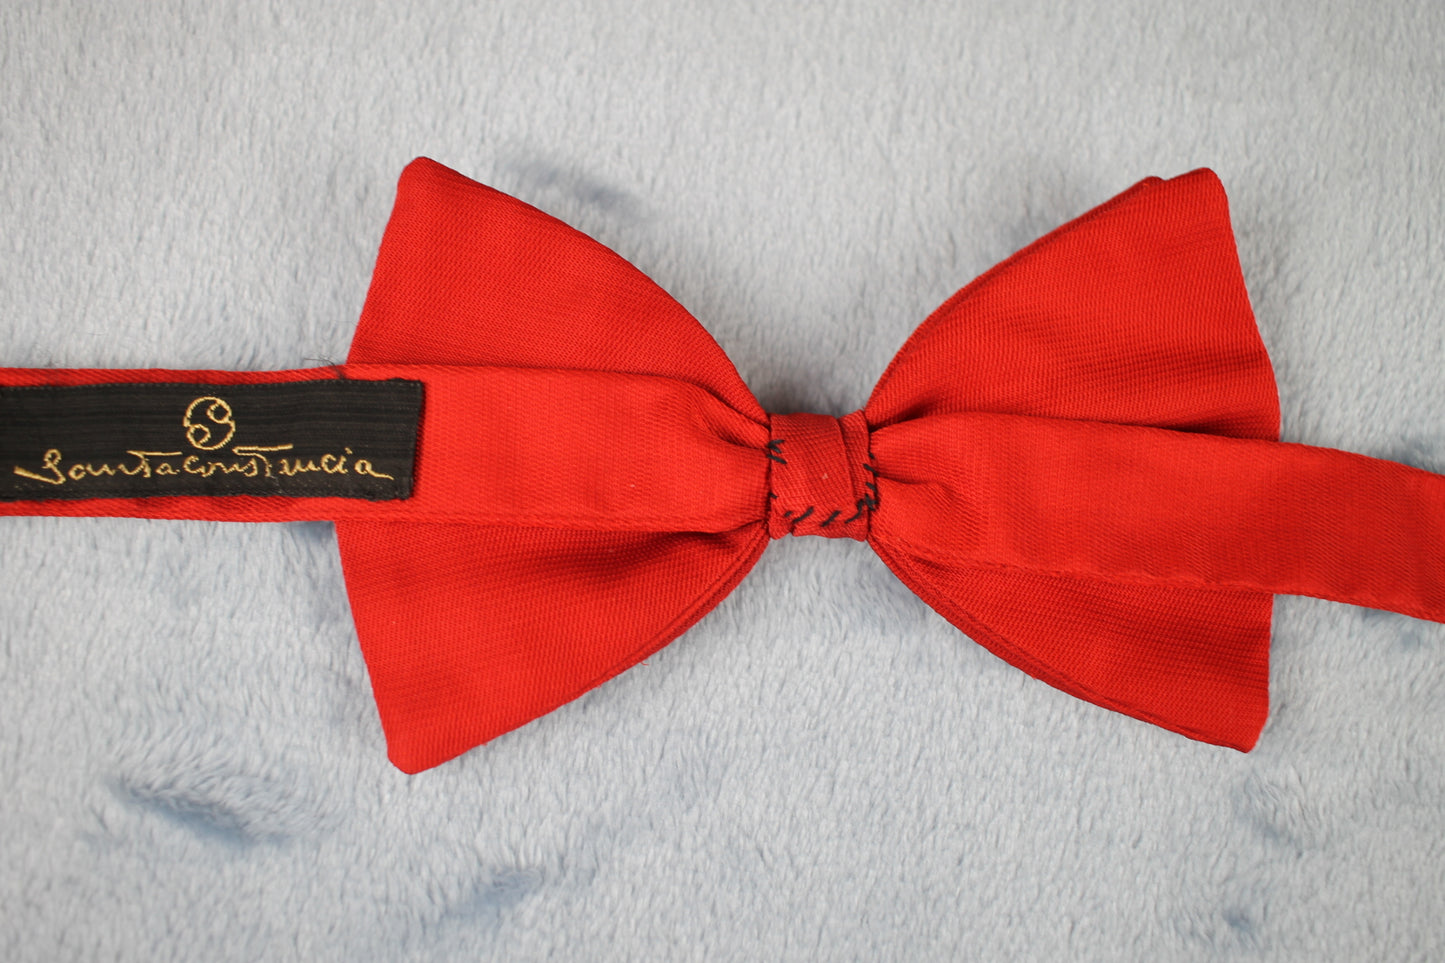 Vintage Santa Carstuicia pre-tied red velcro bow tie one size